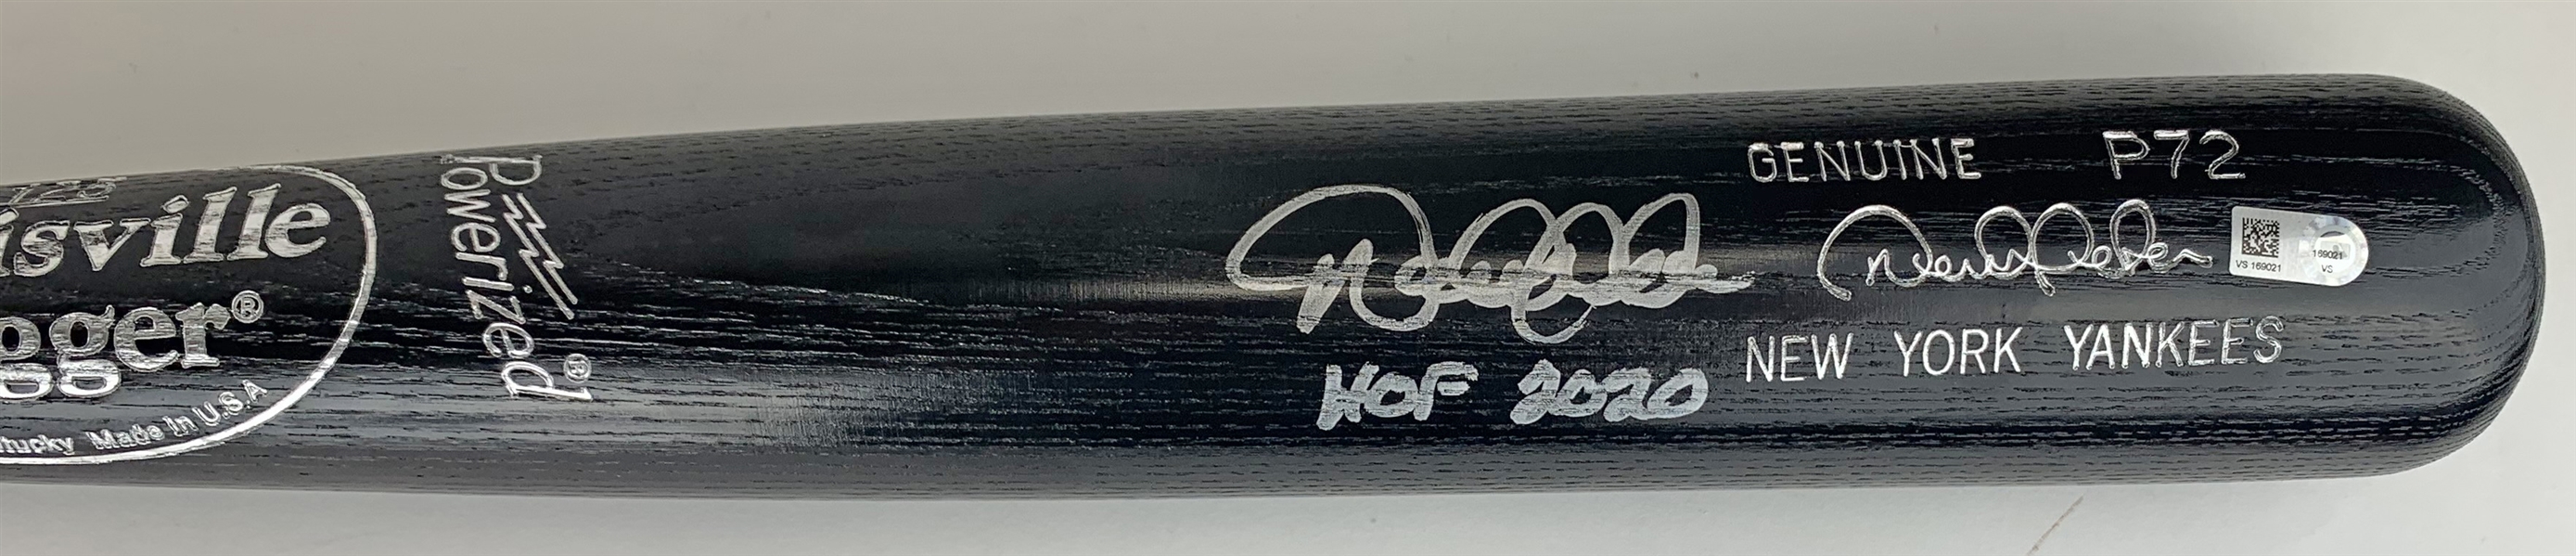 Derek Jeter Rare Signed & "HOF 2020" Inscribed Personal Model Baseball Bat (MLB)